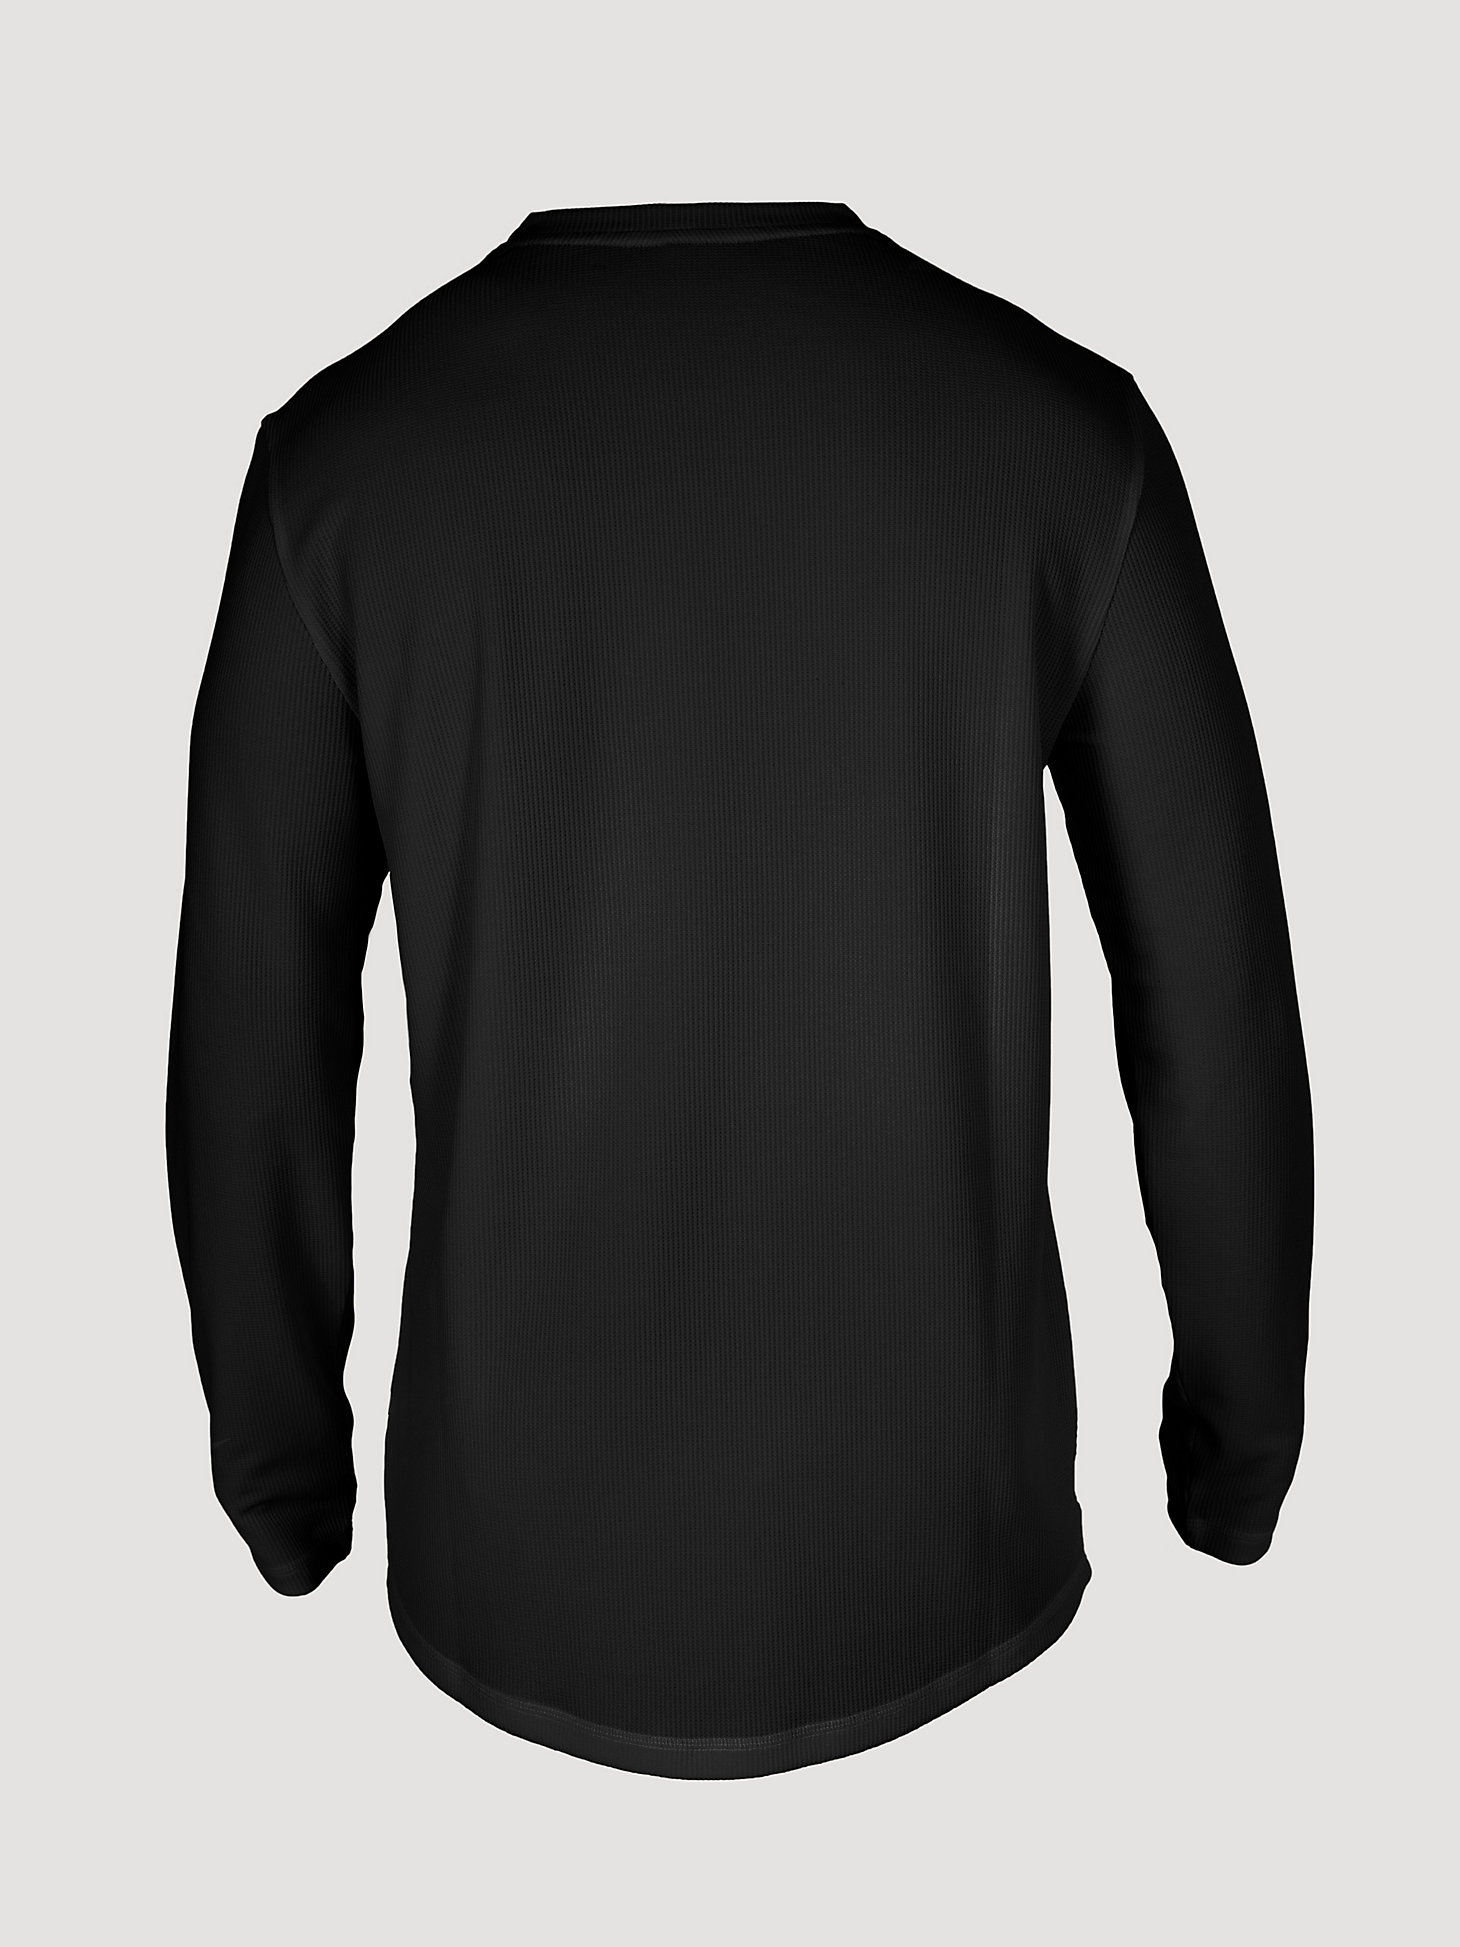 Mens Base Layers LS Chest Pocket Crewneck Shirt:Black:M alternative view 1